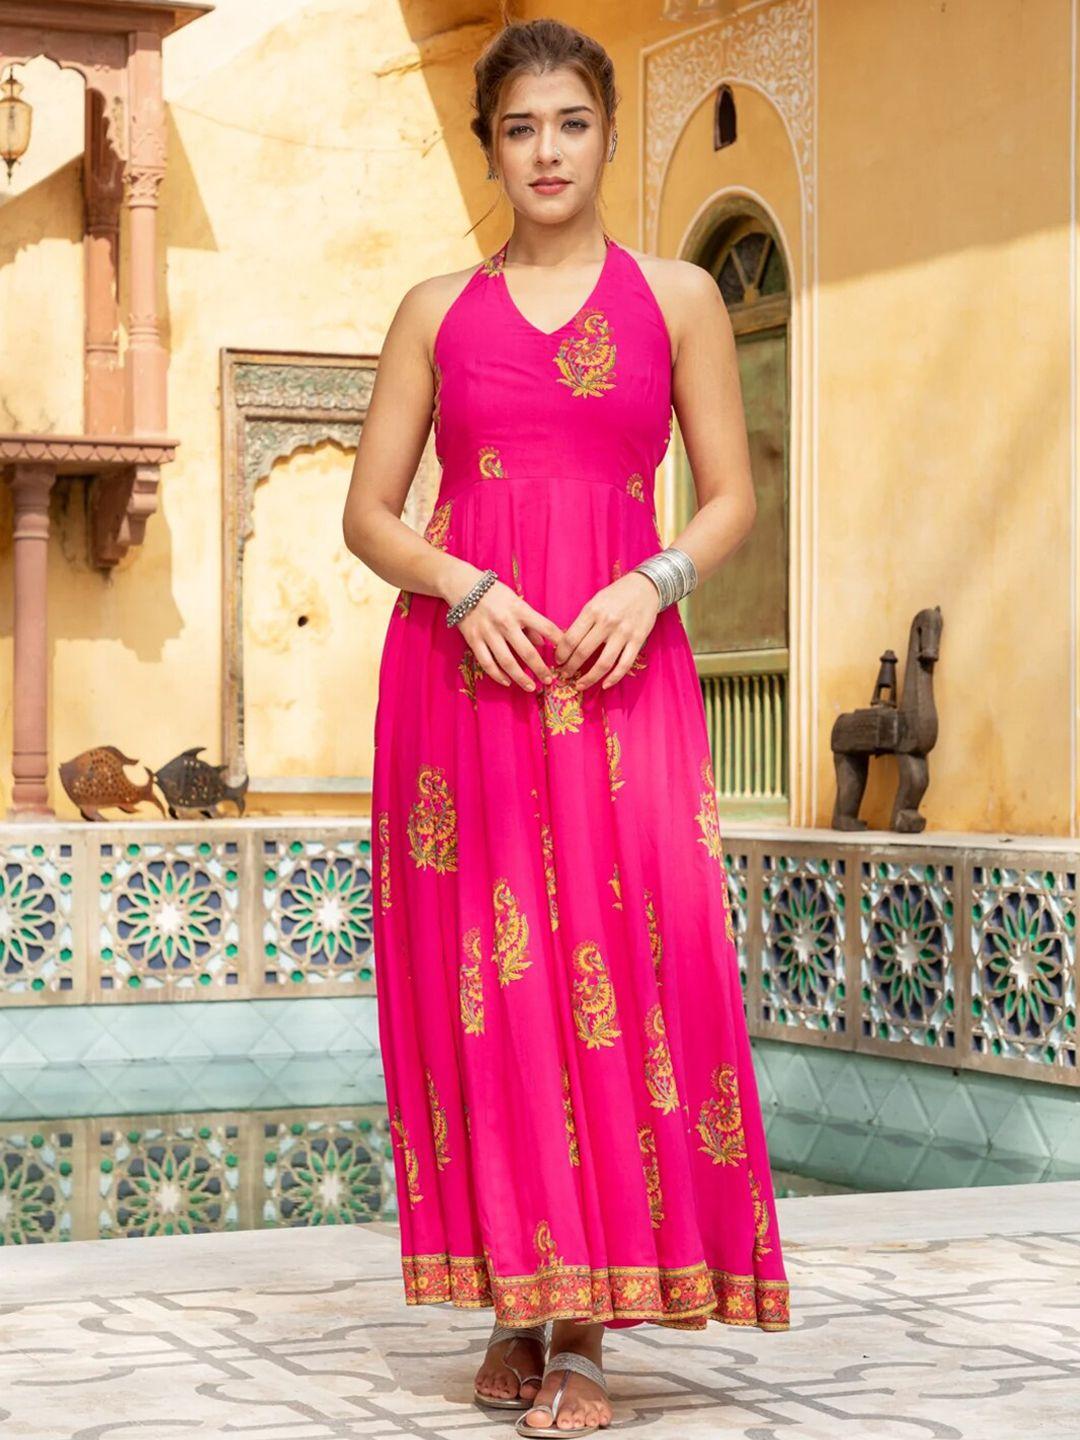 ambraee pink ethnic motifs halter neck maxi dress